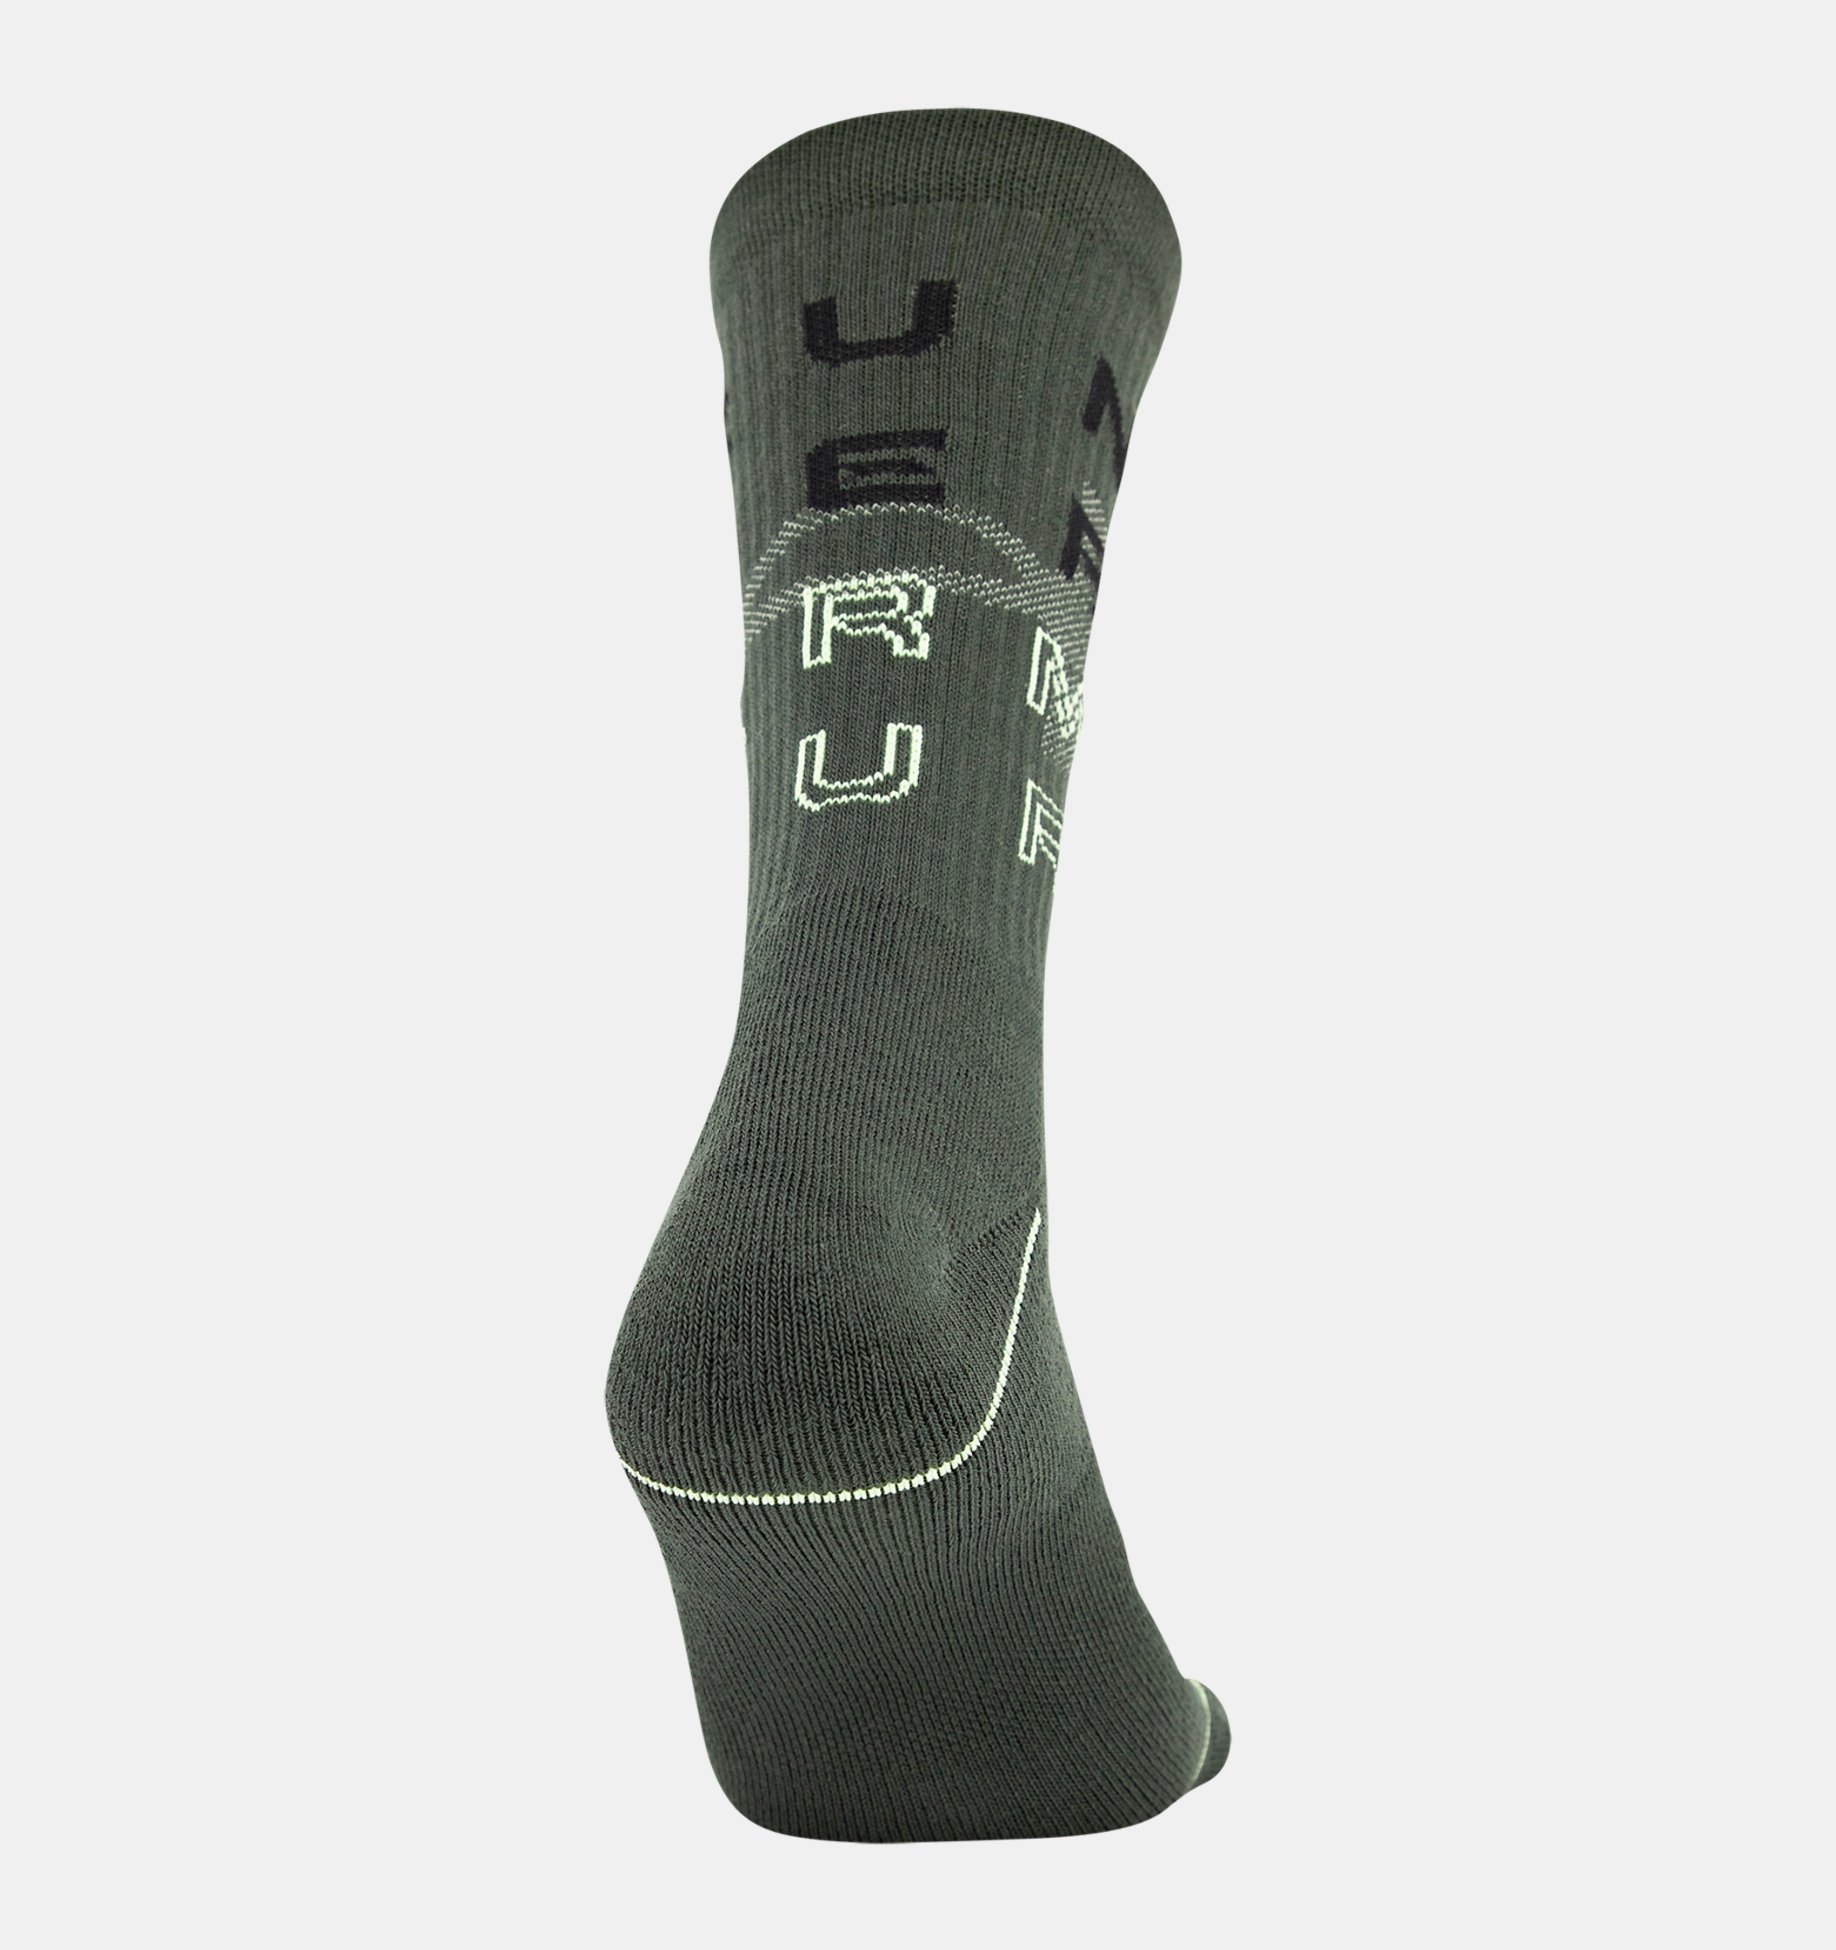 $45 UNDER ARMOUR PHENOM Men 3-Pair Pack BLACK BLUE Athletic Crew Socks SHOE 9-12